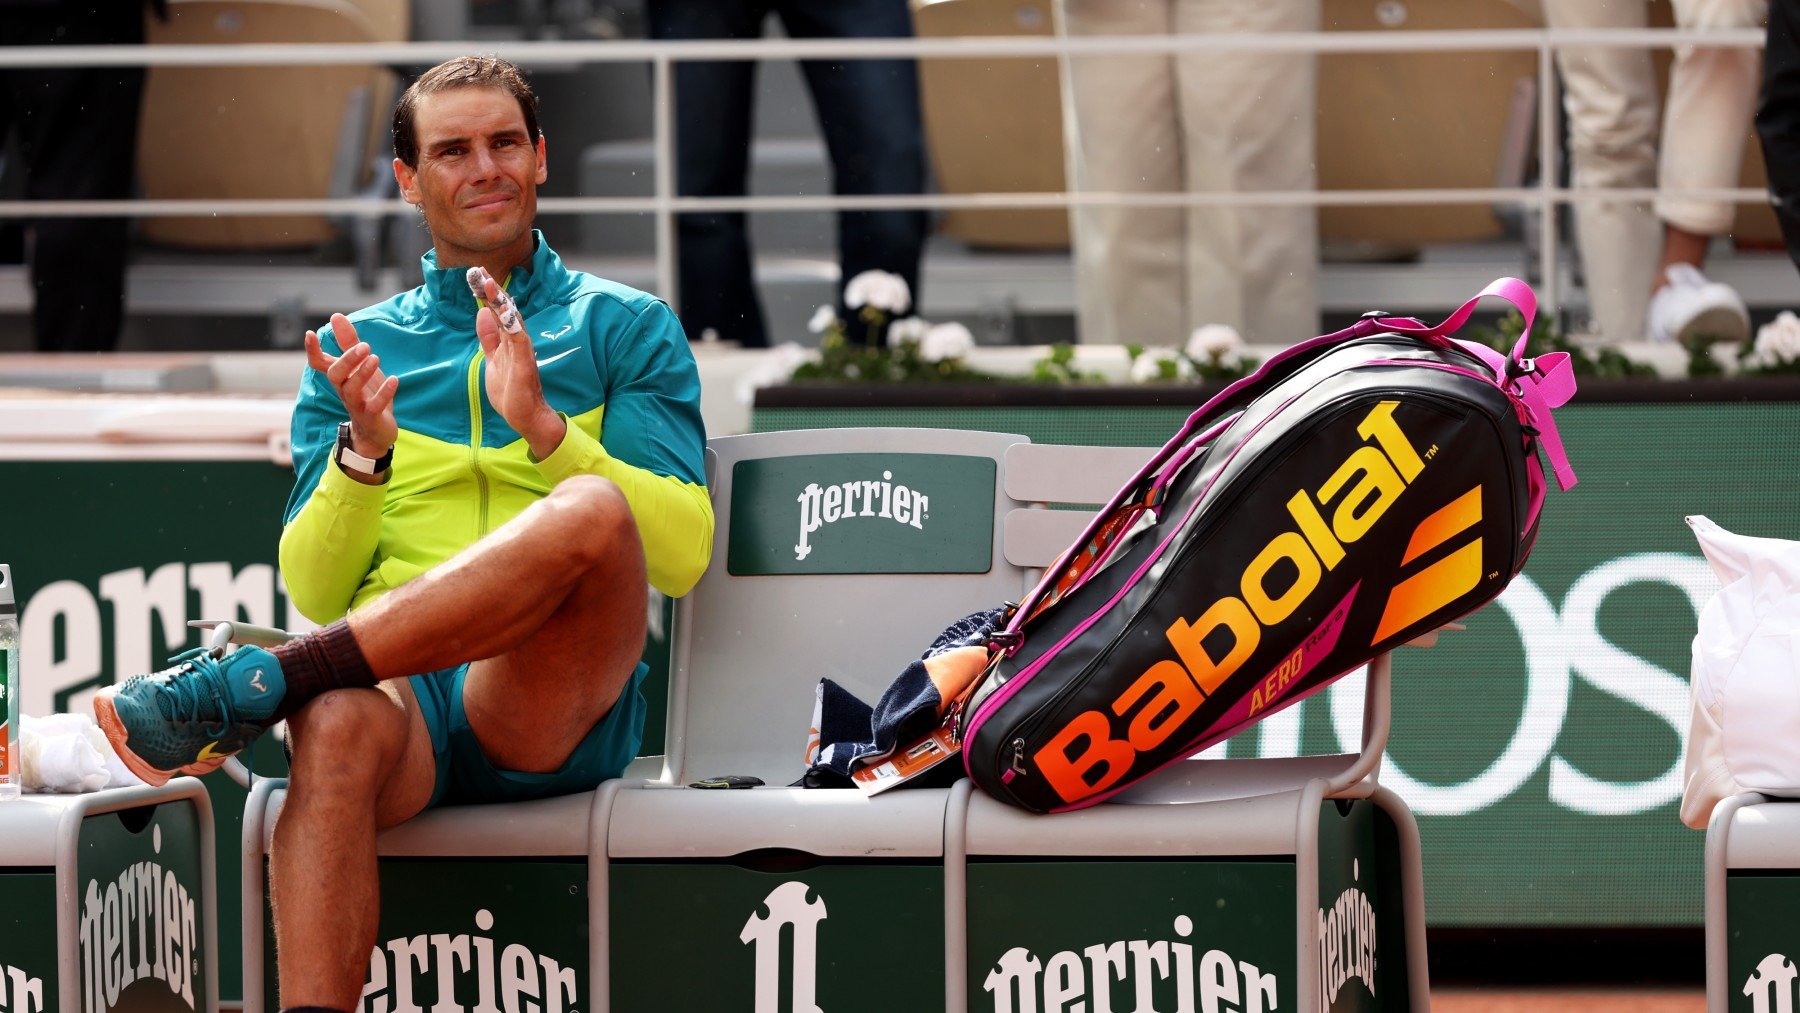 Rafa Nadal, en Roland Garros